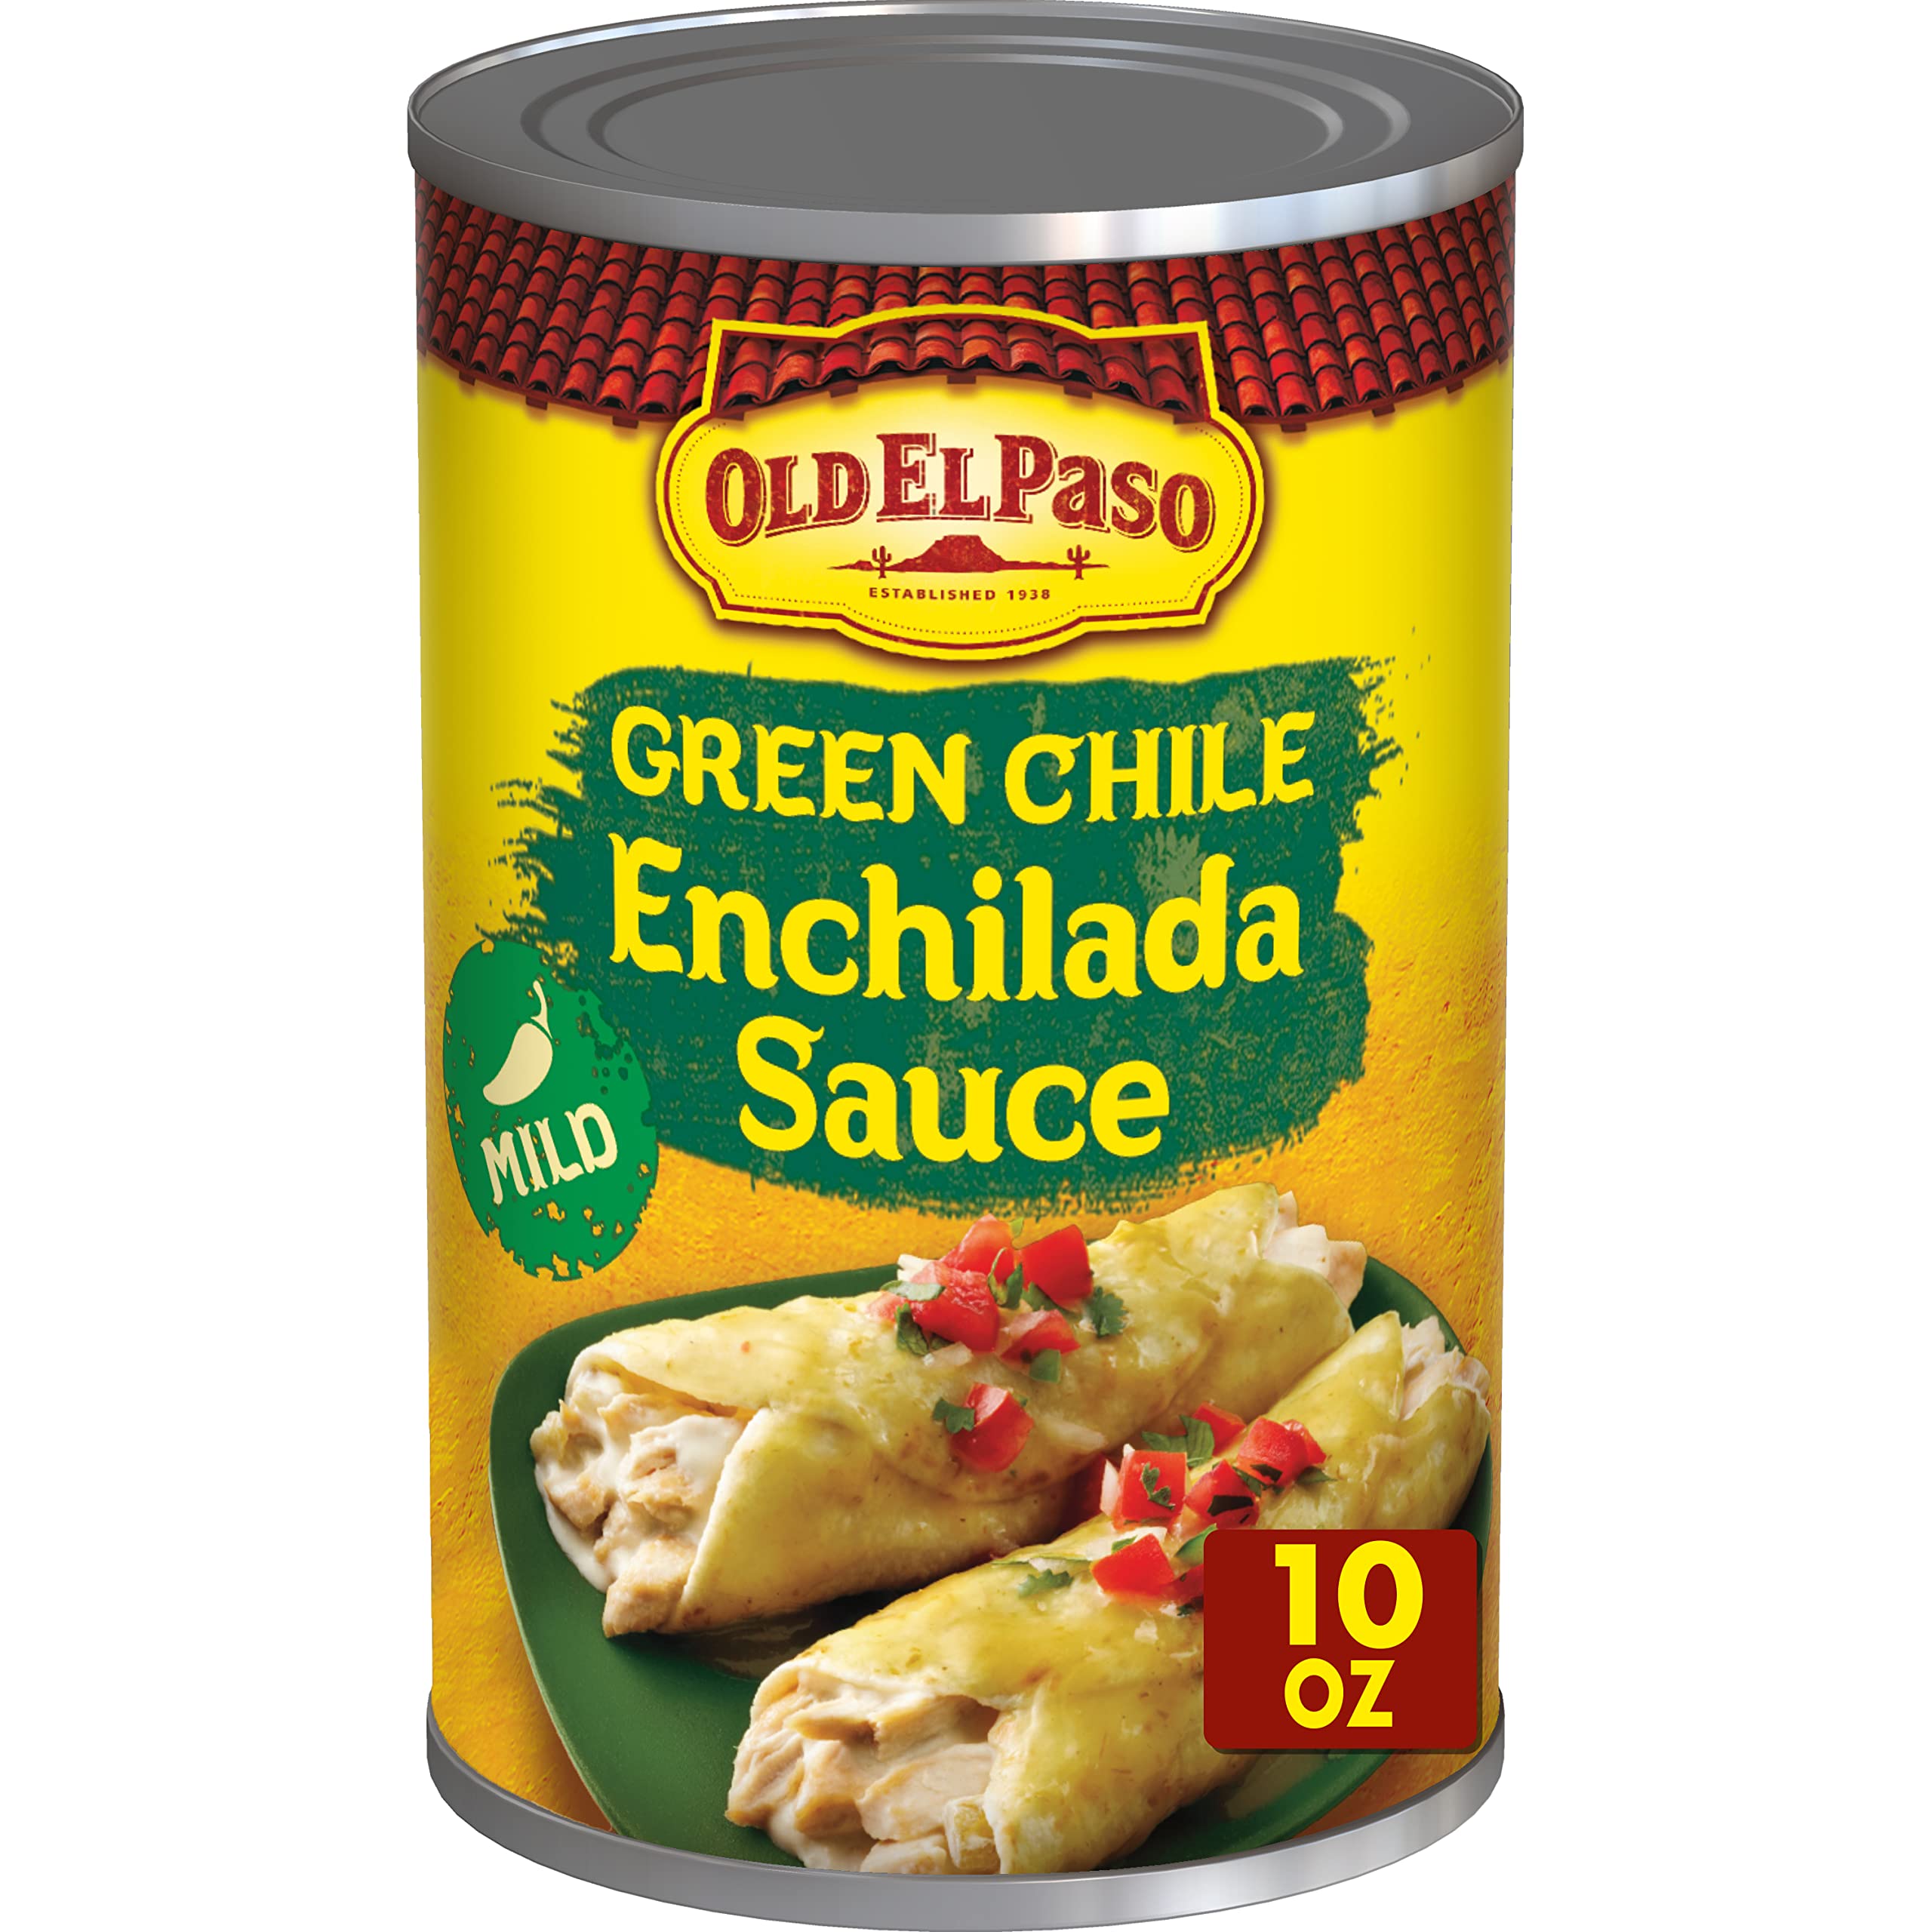 10-Oz Old El Paso Mild Green Chile Enchilada Sauce $1.35 w/ S&S + Free Shipping w/ Prime or on $35+